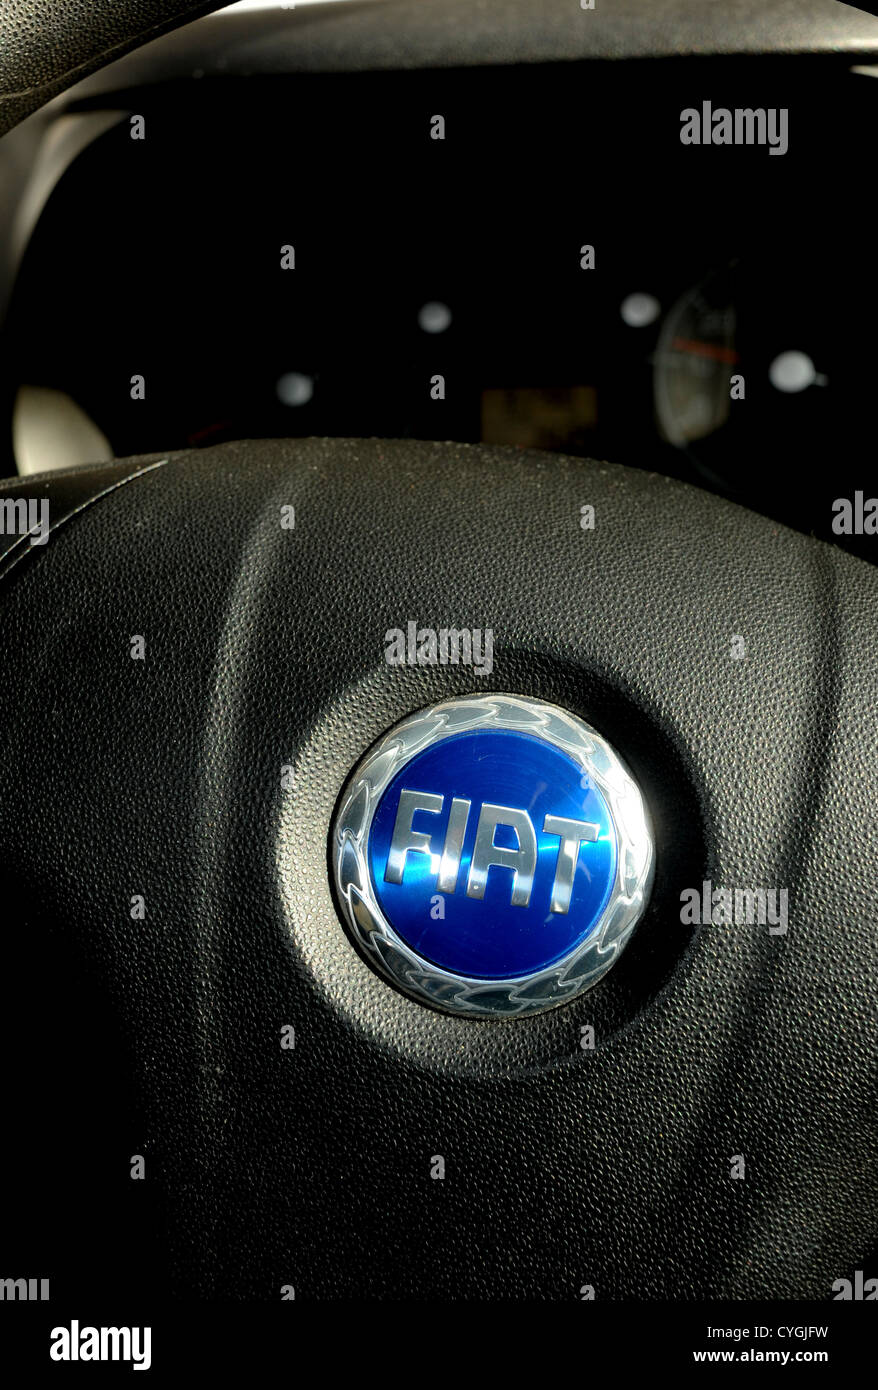 Fiat Punto Auto Abzeichen Emblem am Lenkrad Stockfotografie - Alamy